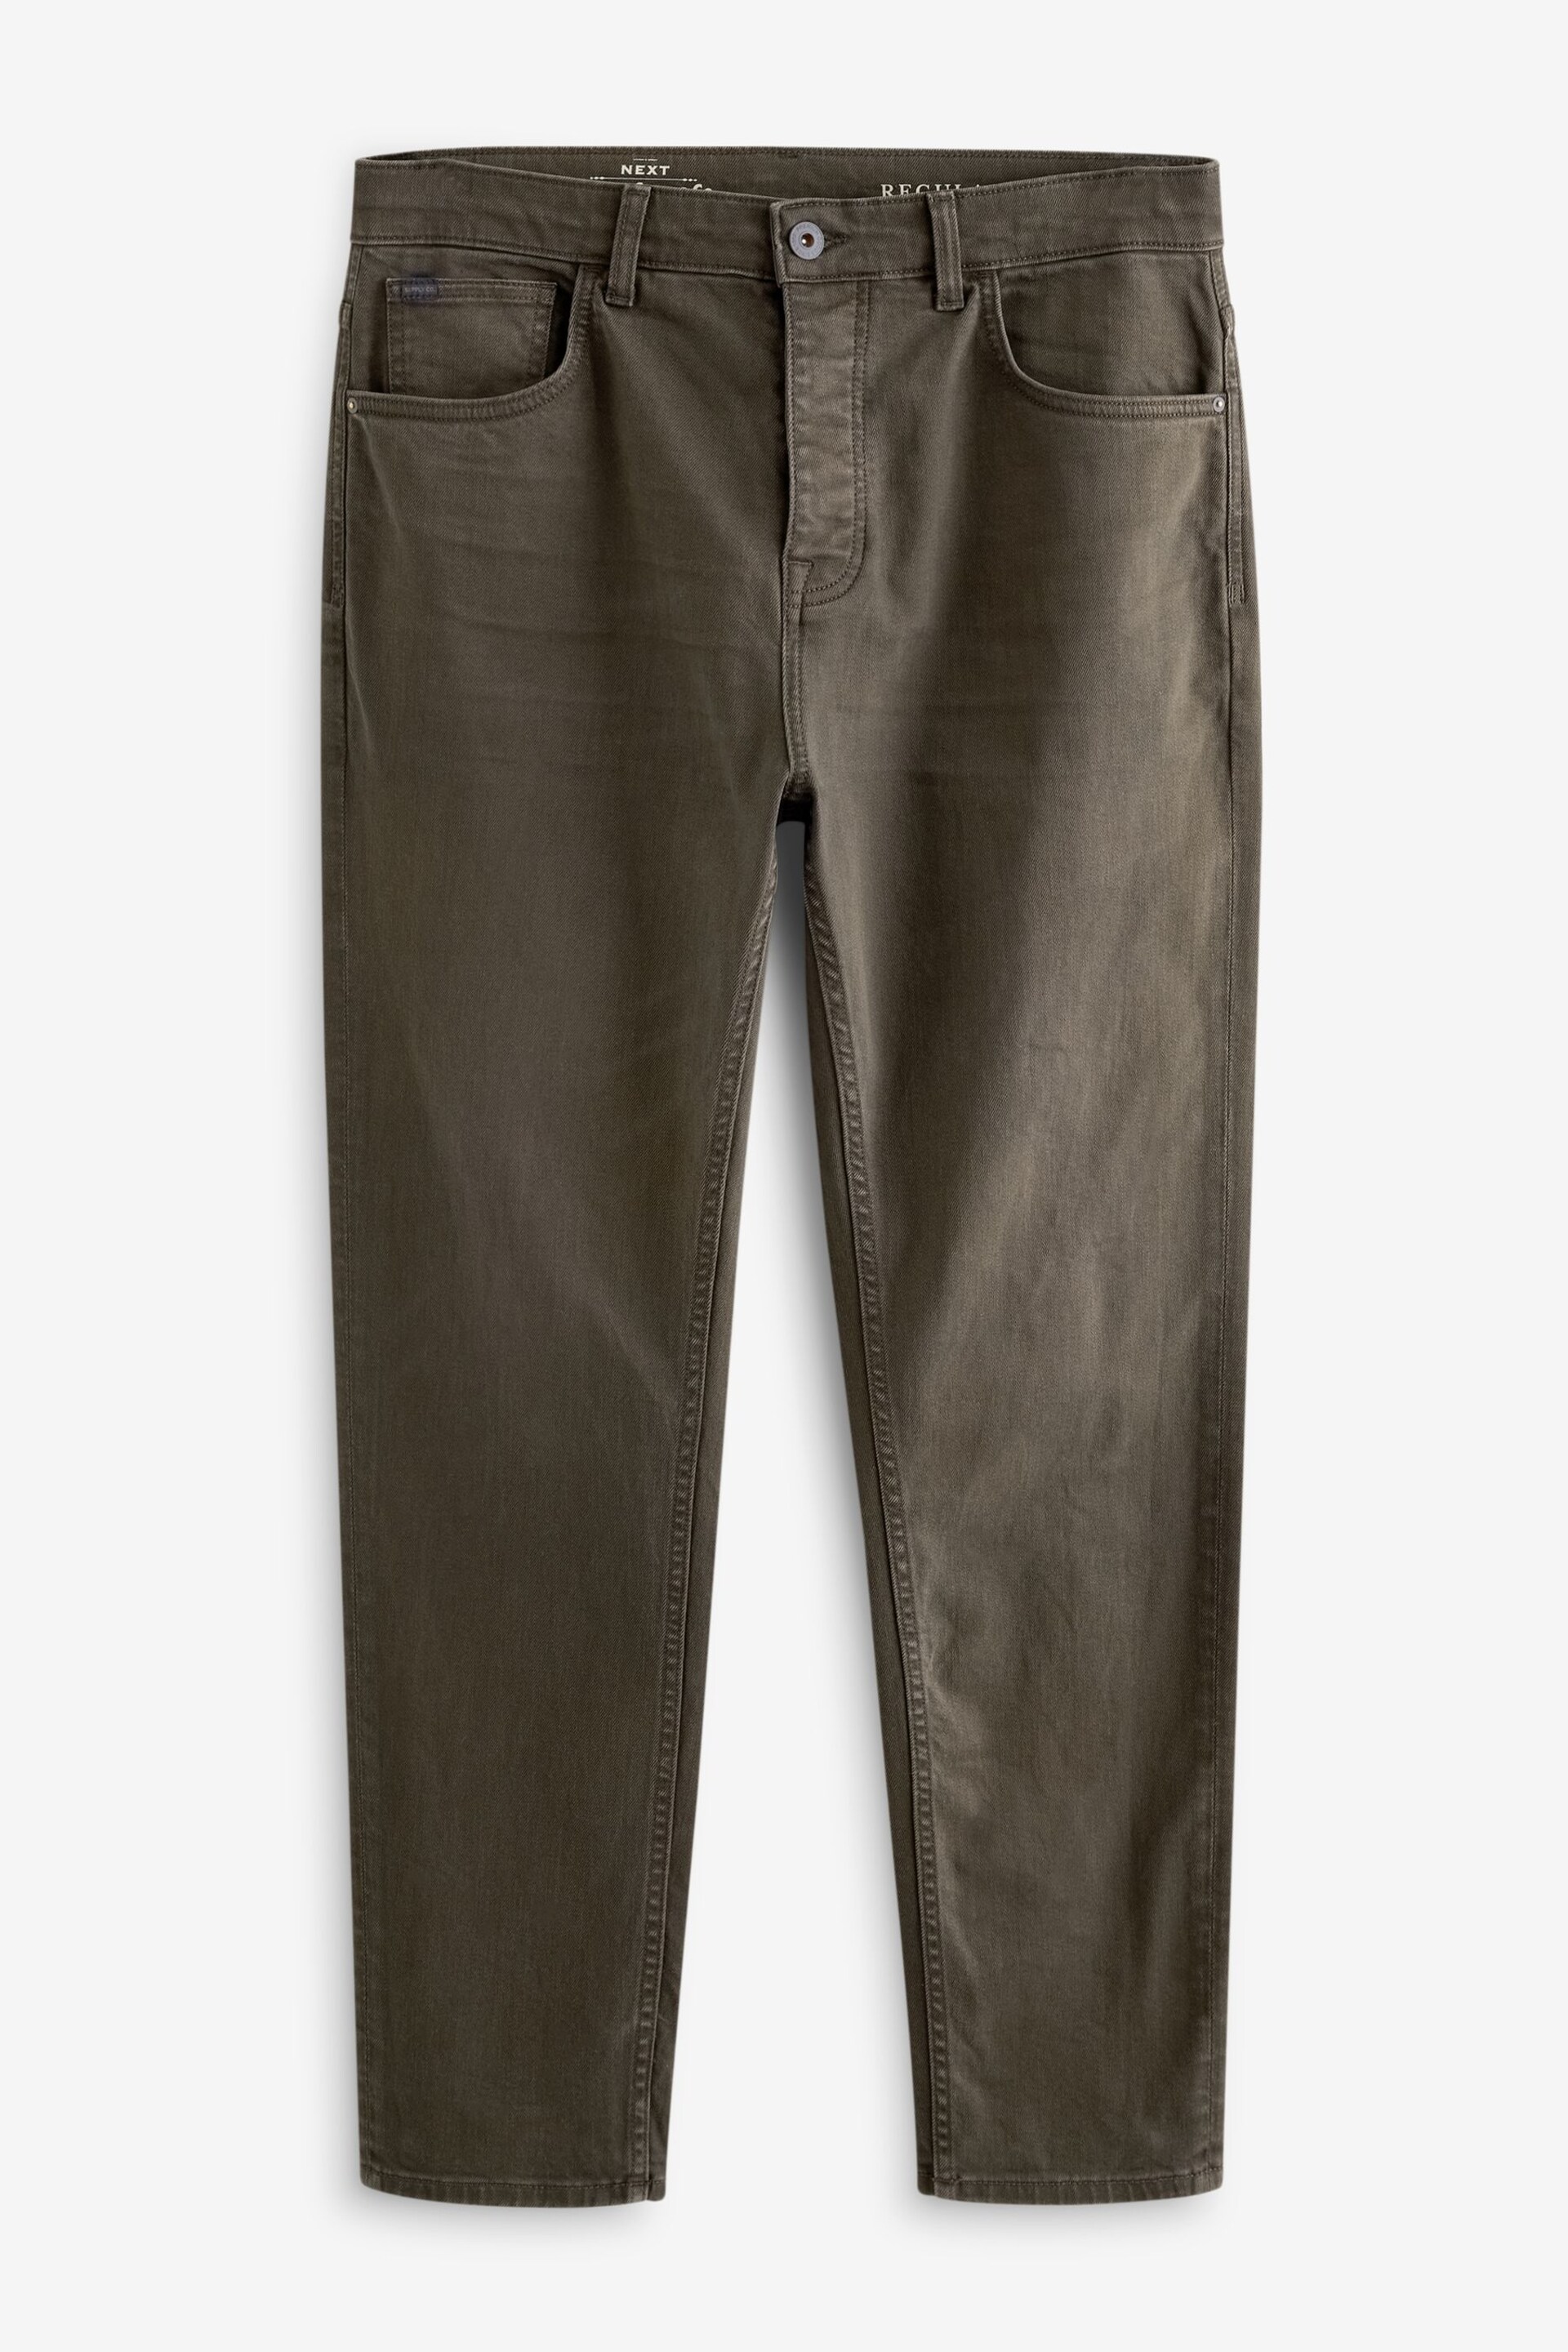 Brown Dark Regular Fit Overdyed Denim Jeans - Image 6 of 10